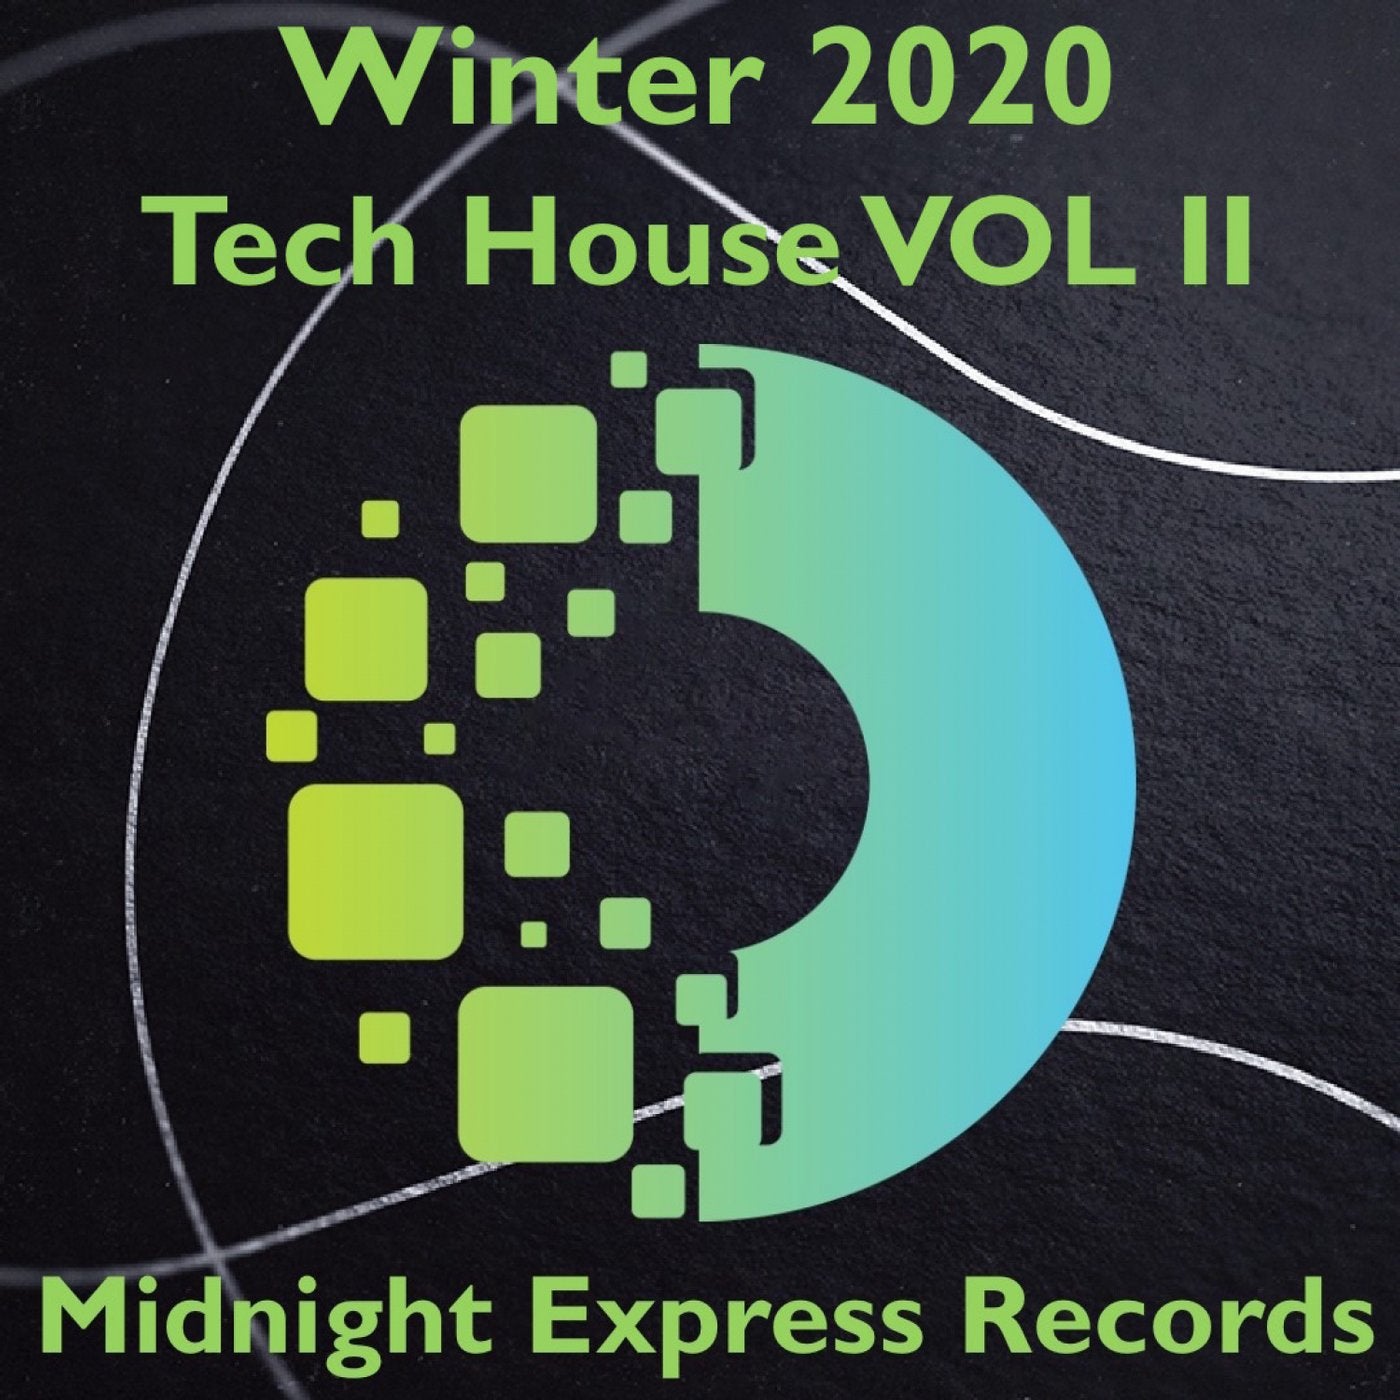 Winter 2020 Tech house VOL II